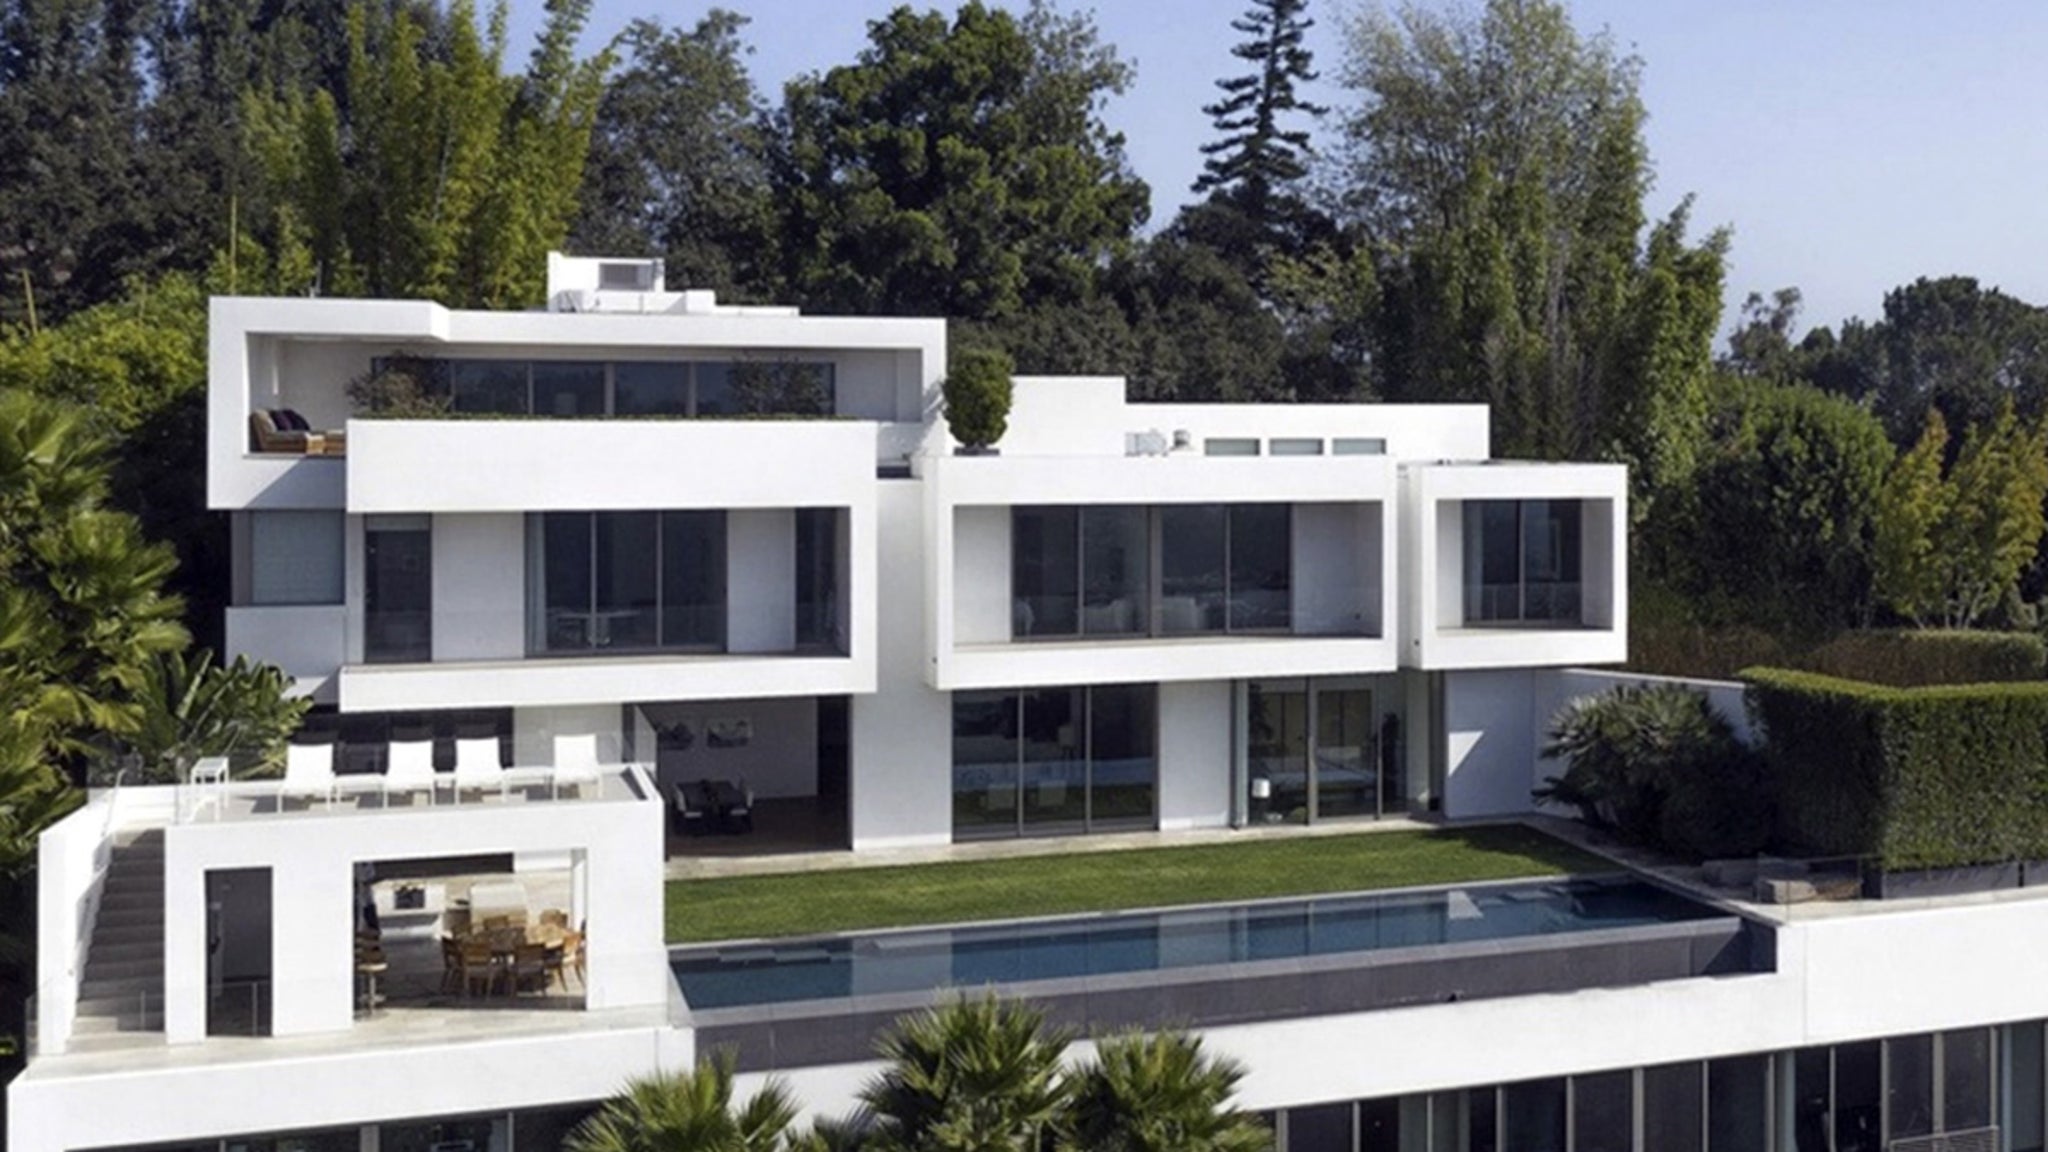 Trevor Noah's $27.5 Million Bel-Air Mansion is a Daily Show Palace - TMZ